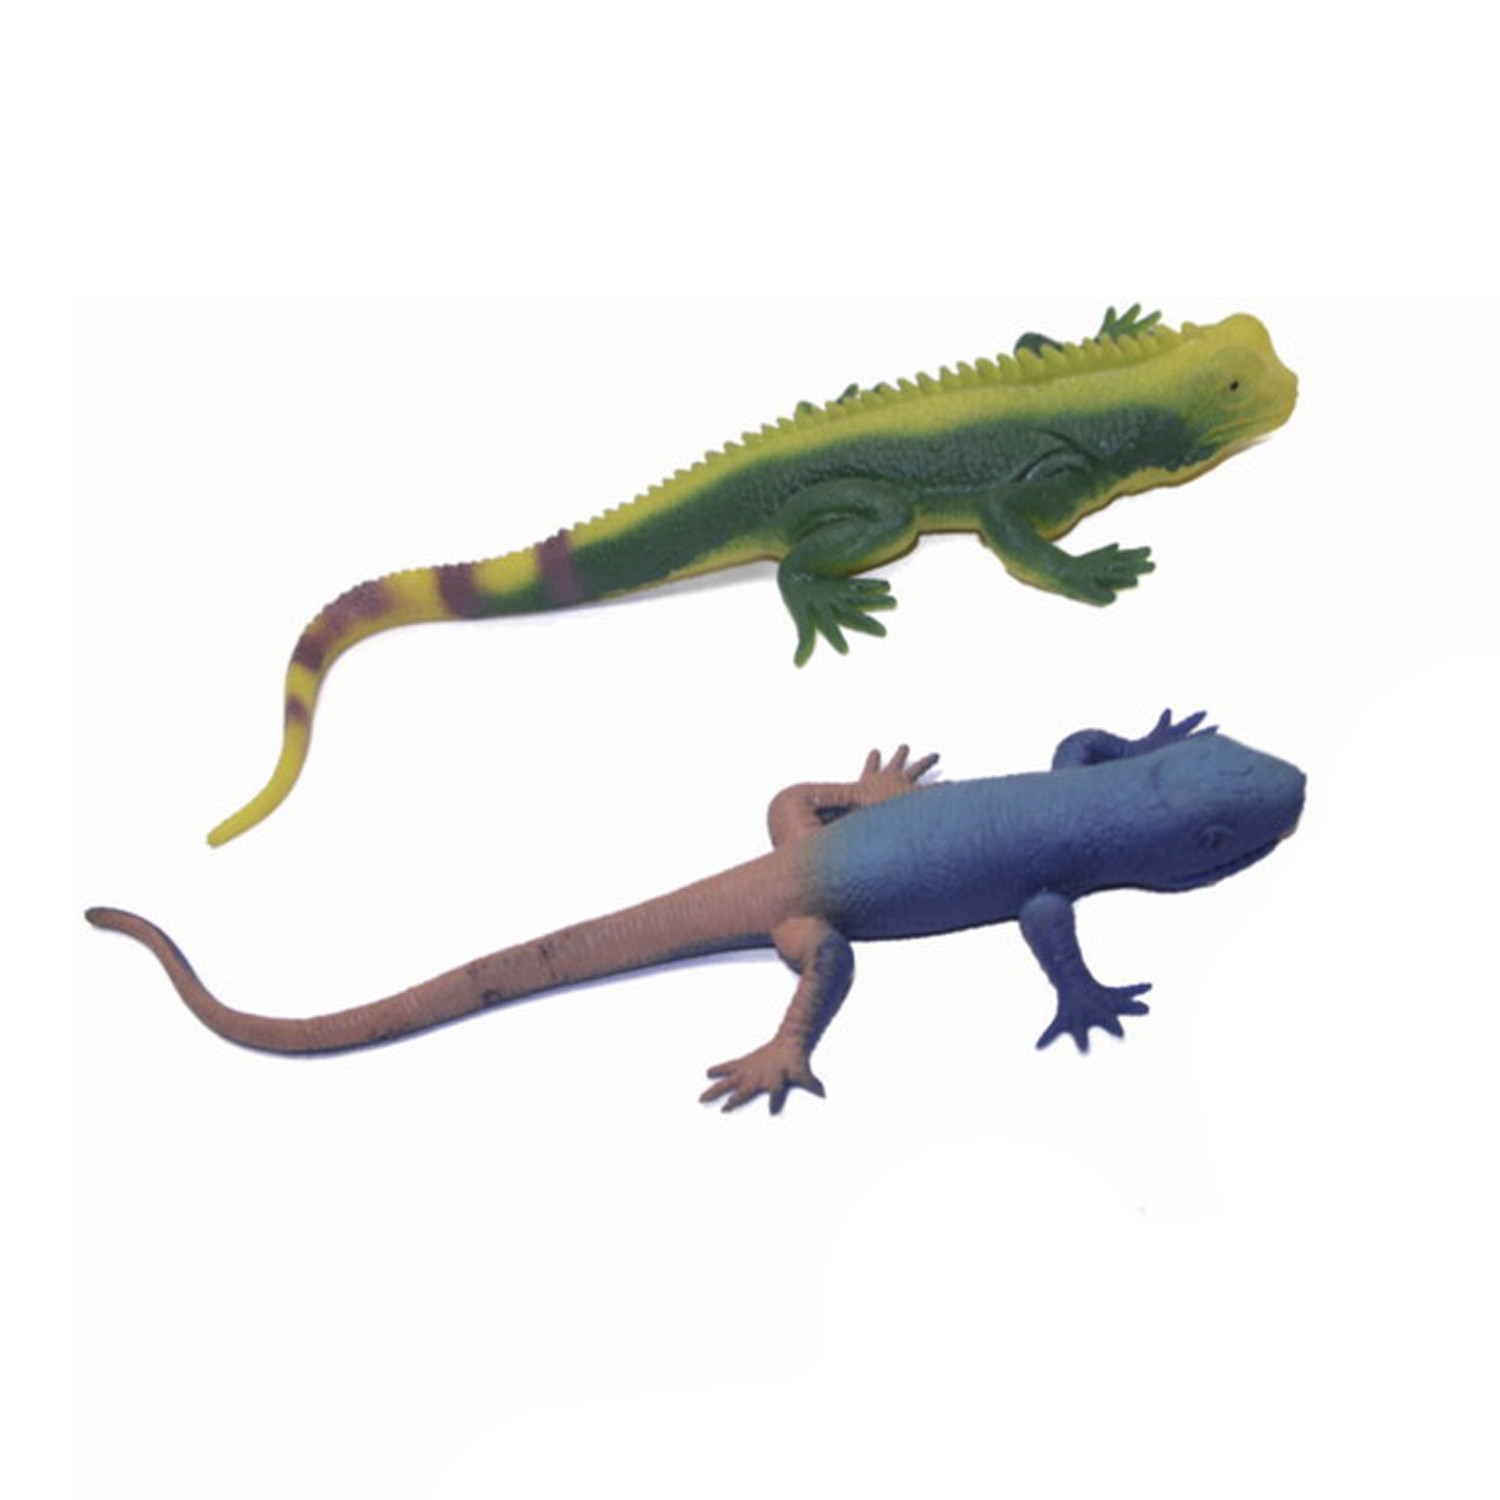 Stretchy Lizard Figure Image